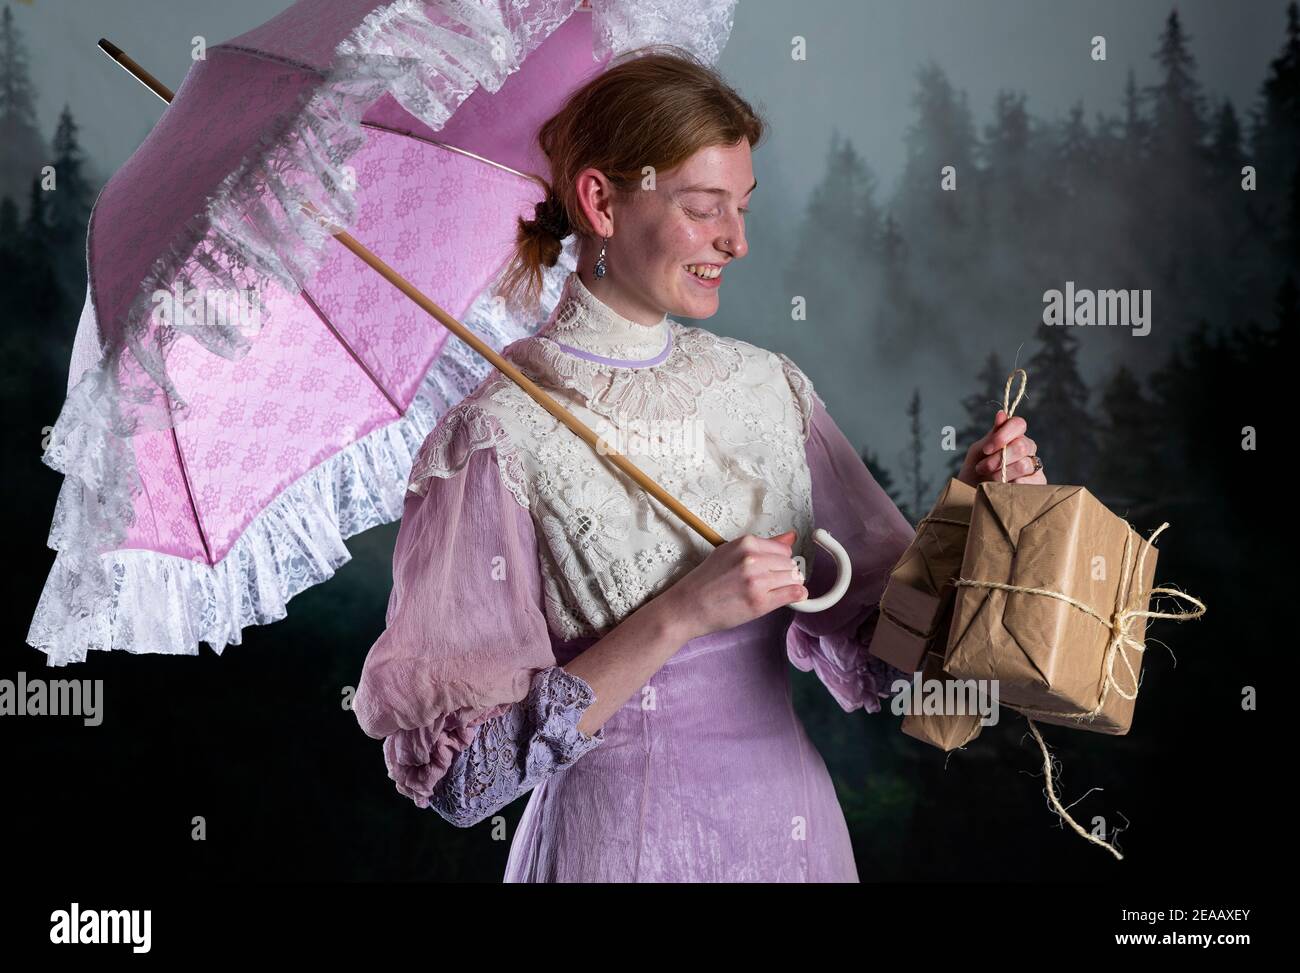 Woman, parasol, gifts, pink vintage dress Stock Photo